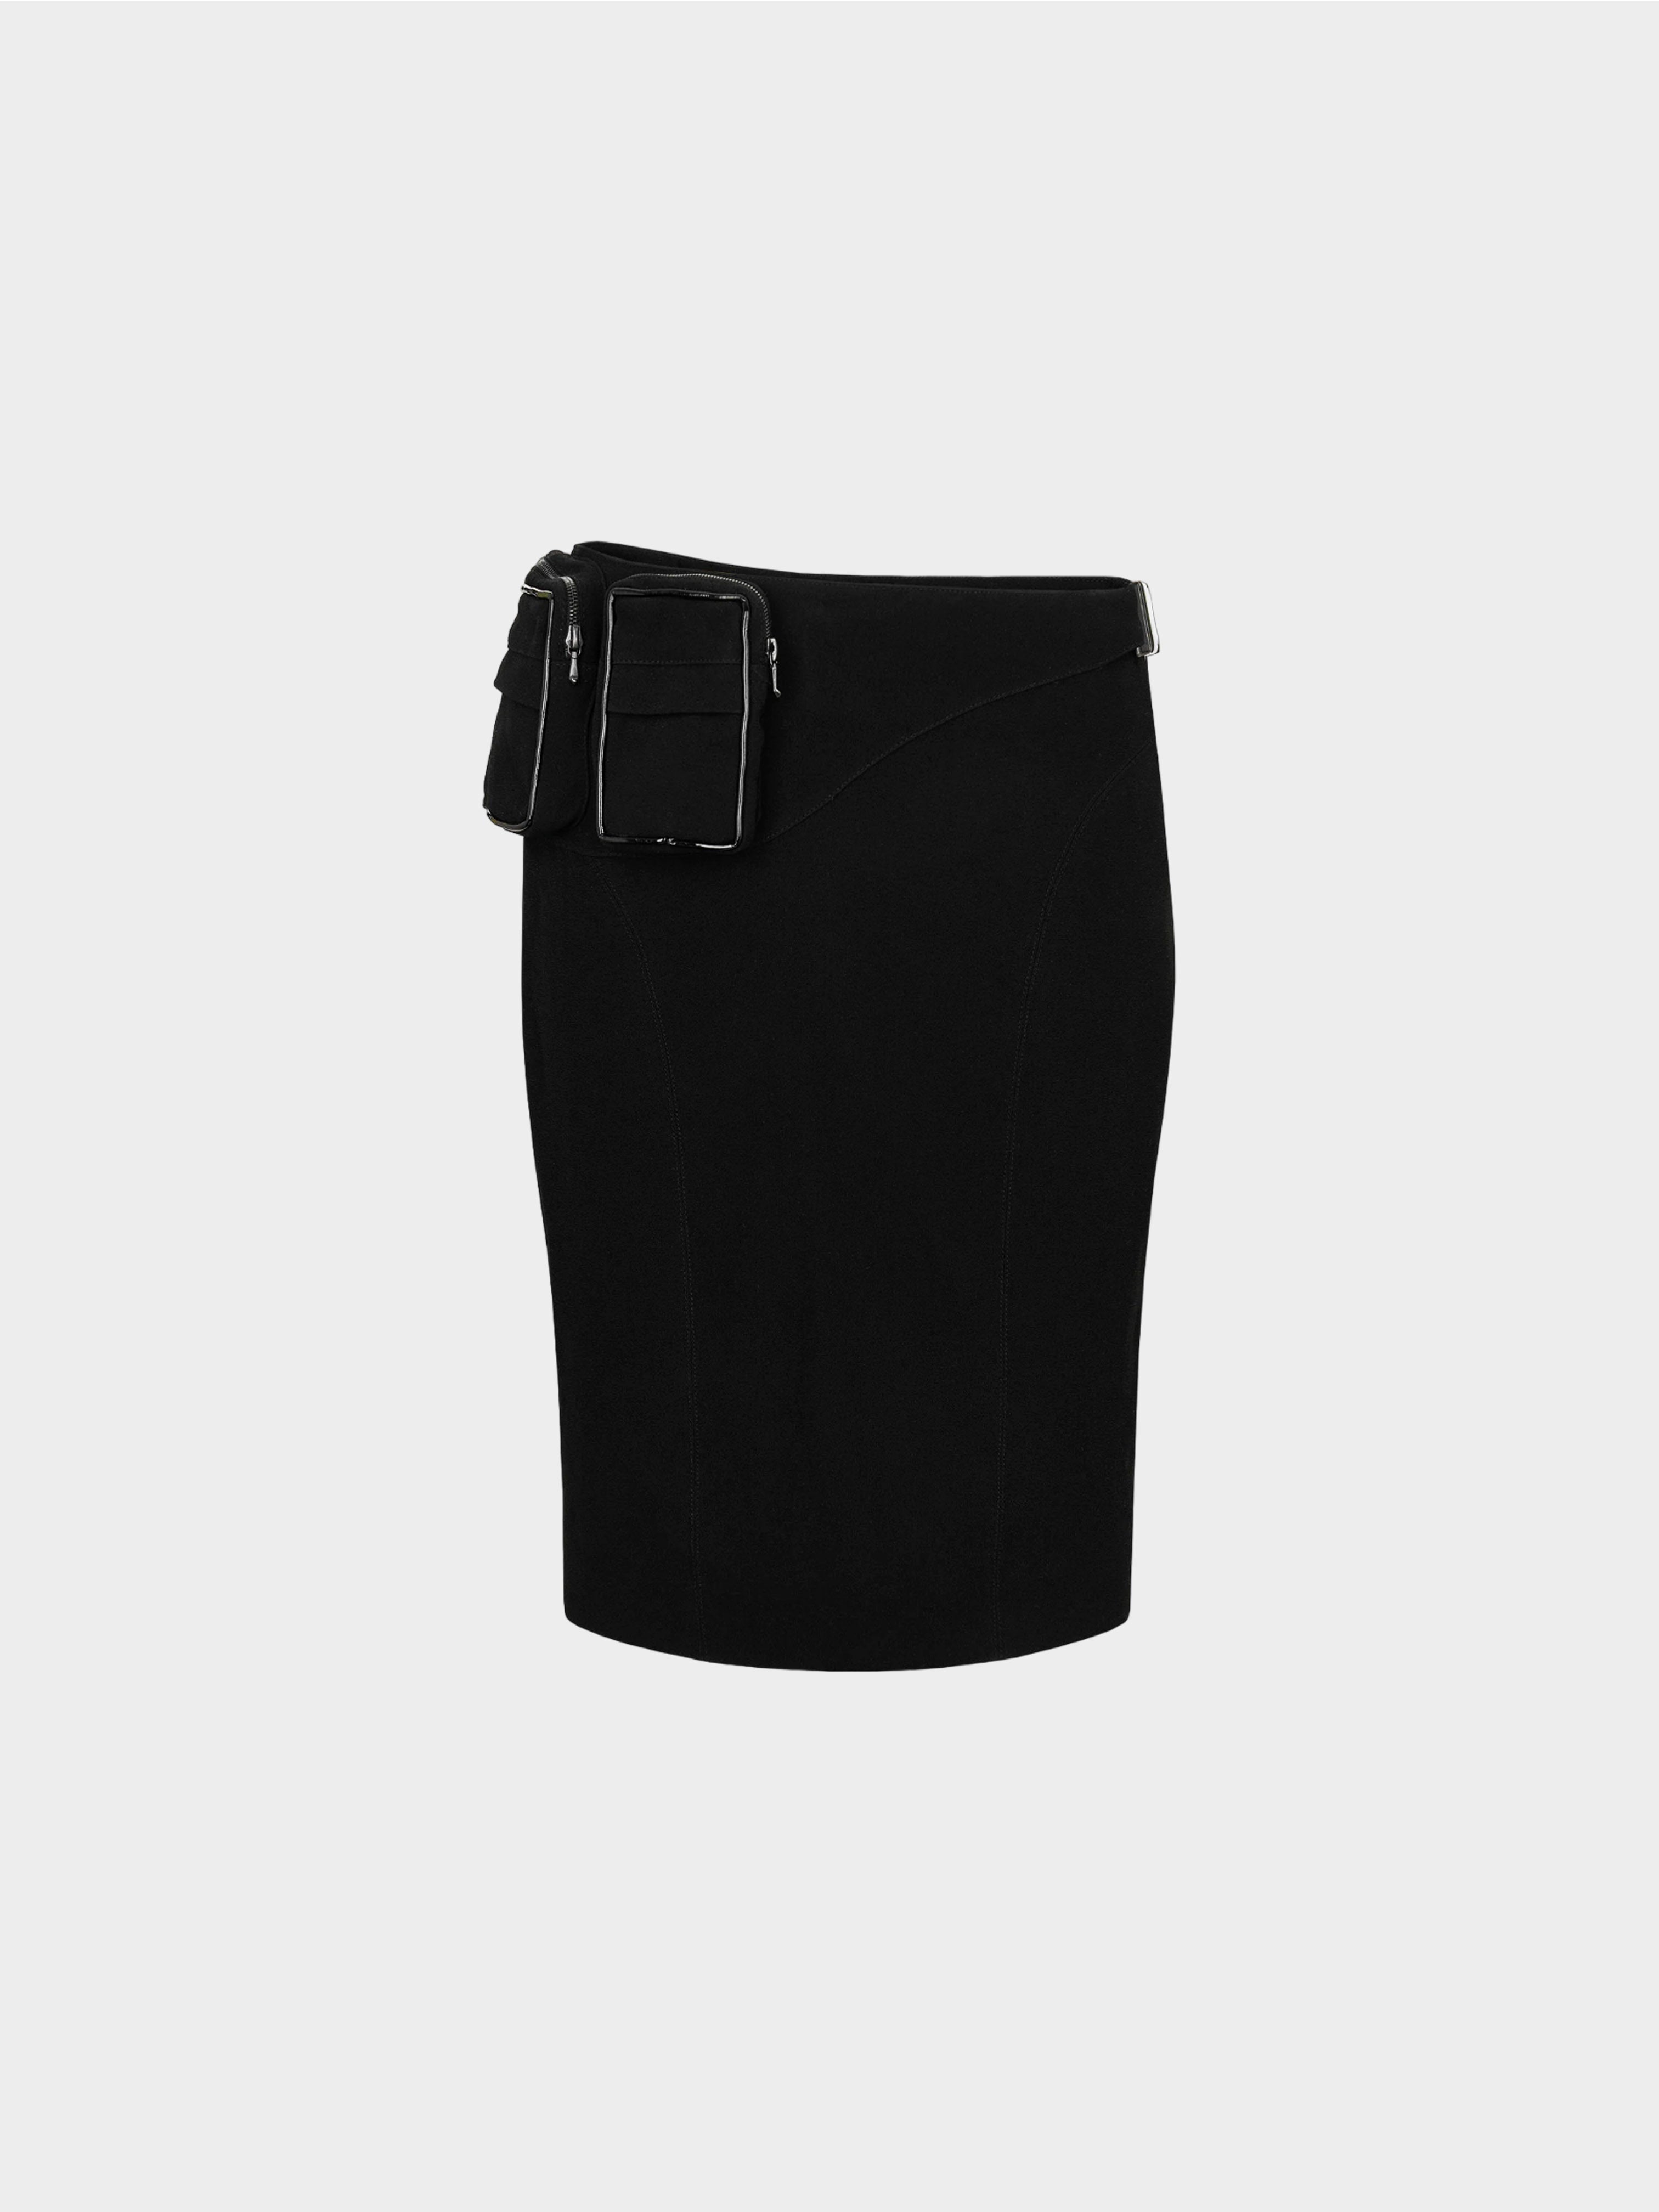 Jean Paul Gaultier 2000s Black Skirt with Cargo Pockets